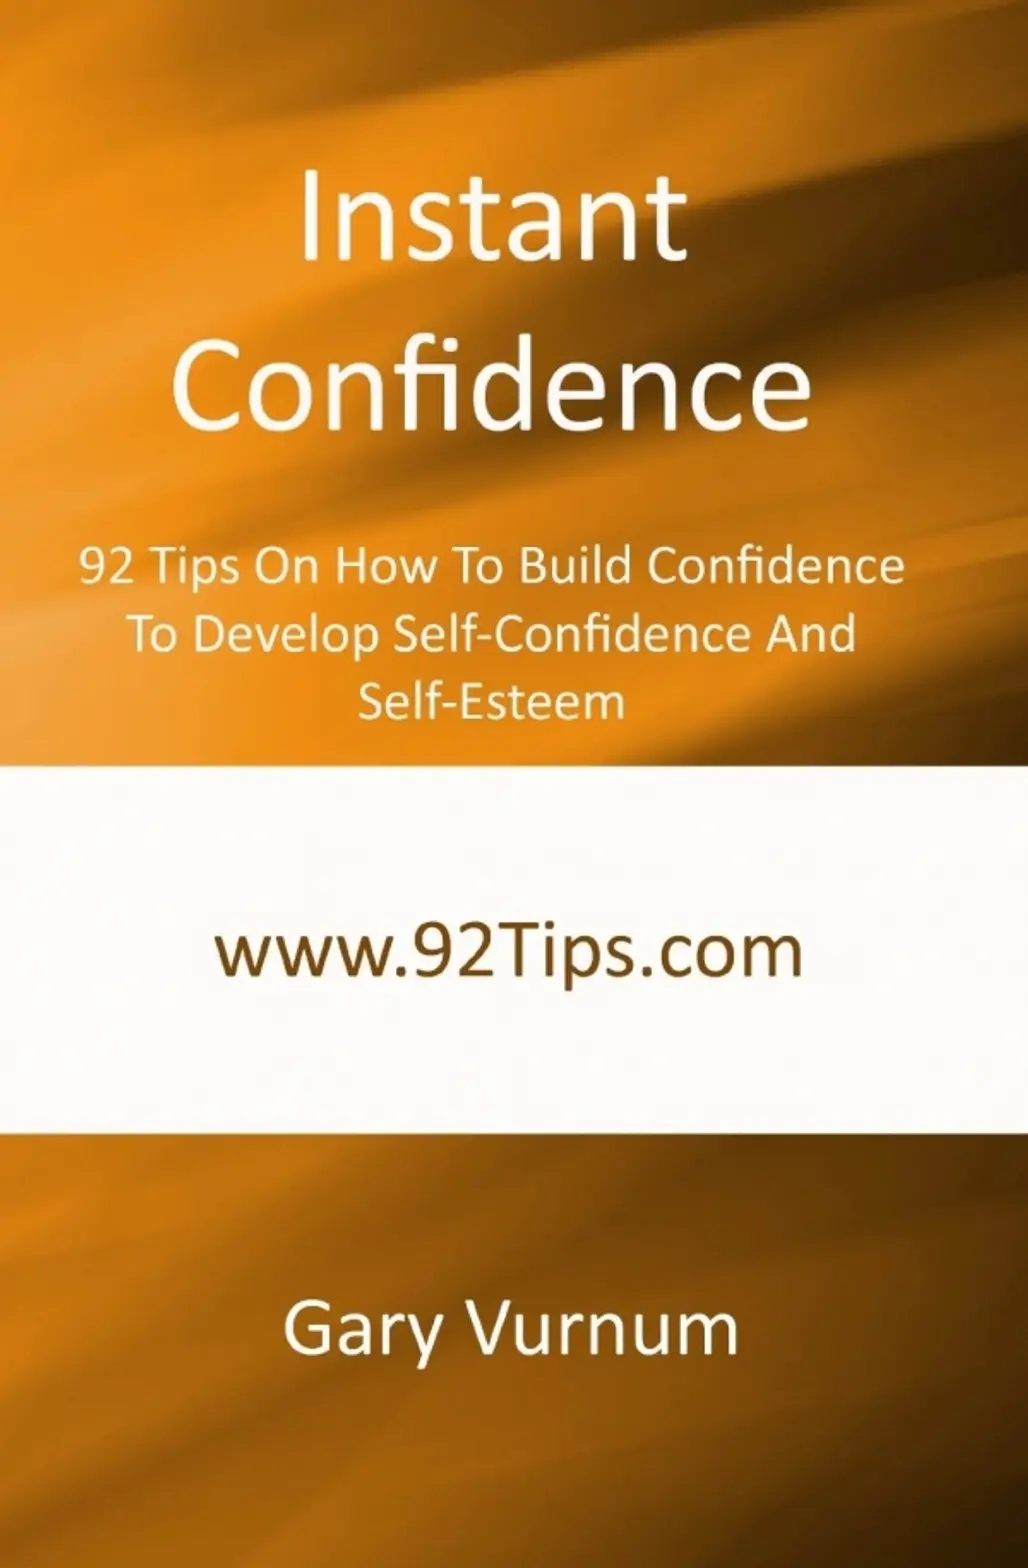 Gary Vurnum - Instant Confidence: 92 Tips